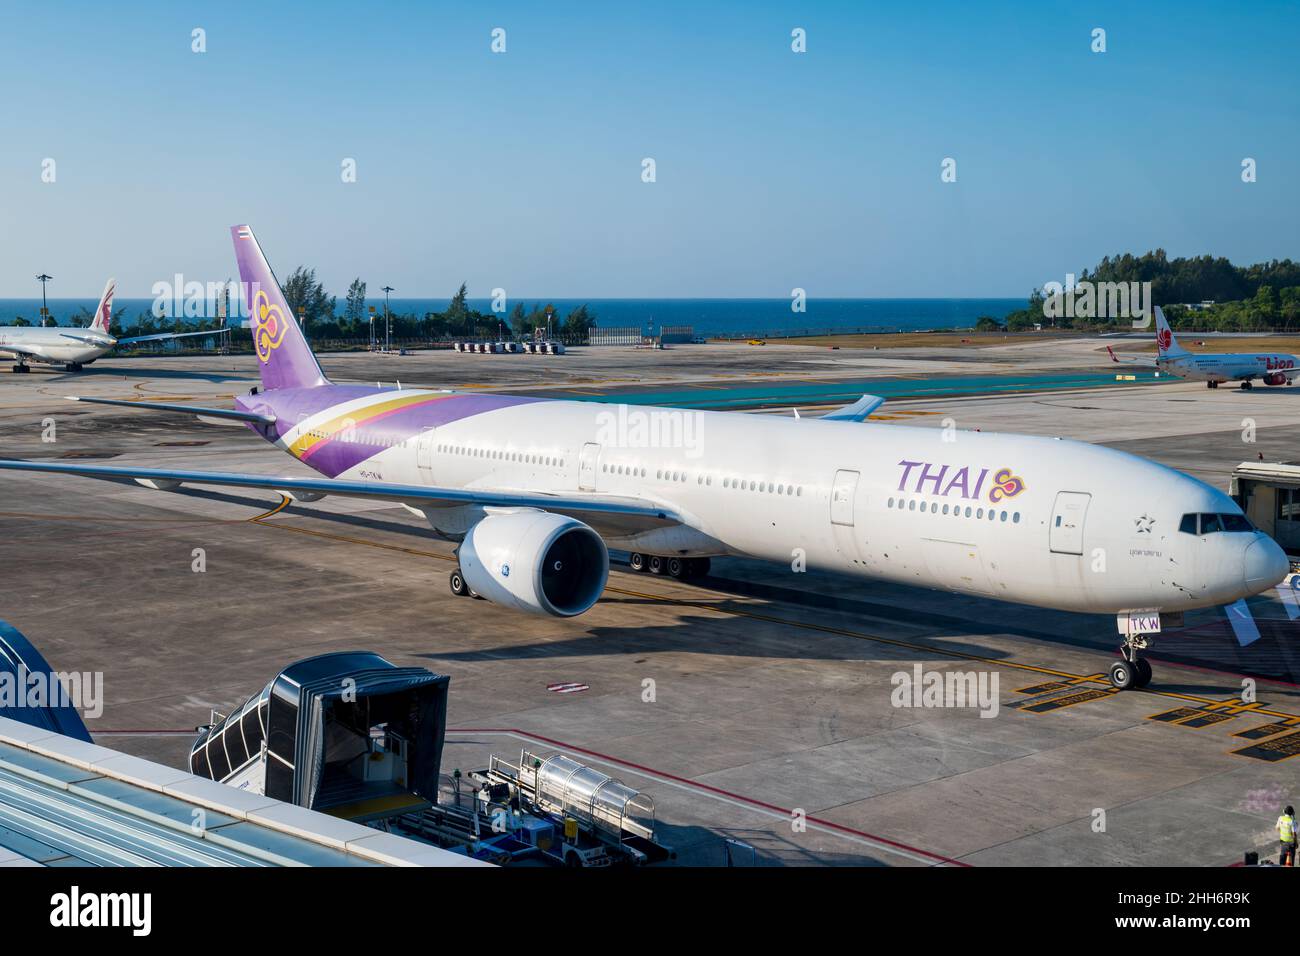 Phuket, Thailand - January 2022: Thai Airways passenger plane at Phuket airport, Thailand. Thai Airways is the flagship carrier of Thailand. Stock Photo